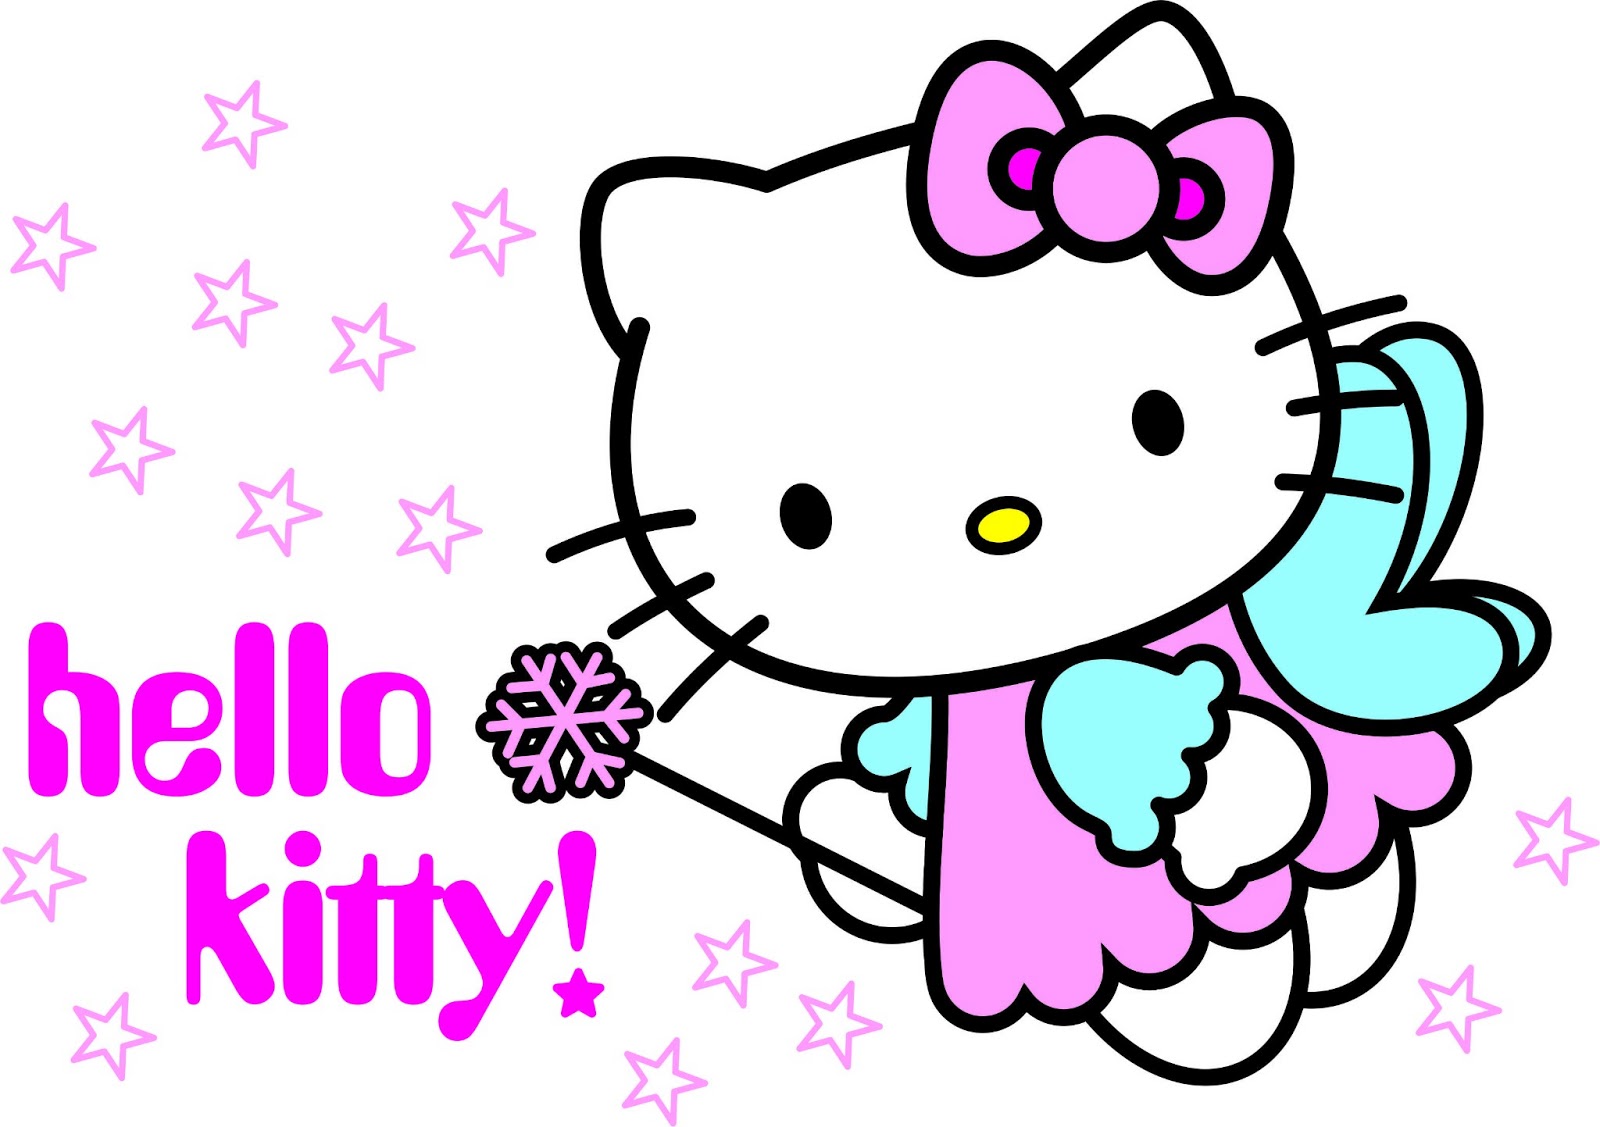 Hello kitty clipart 4 wikiclipart jpeg